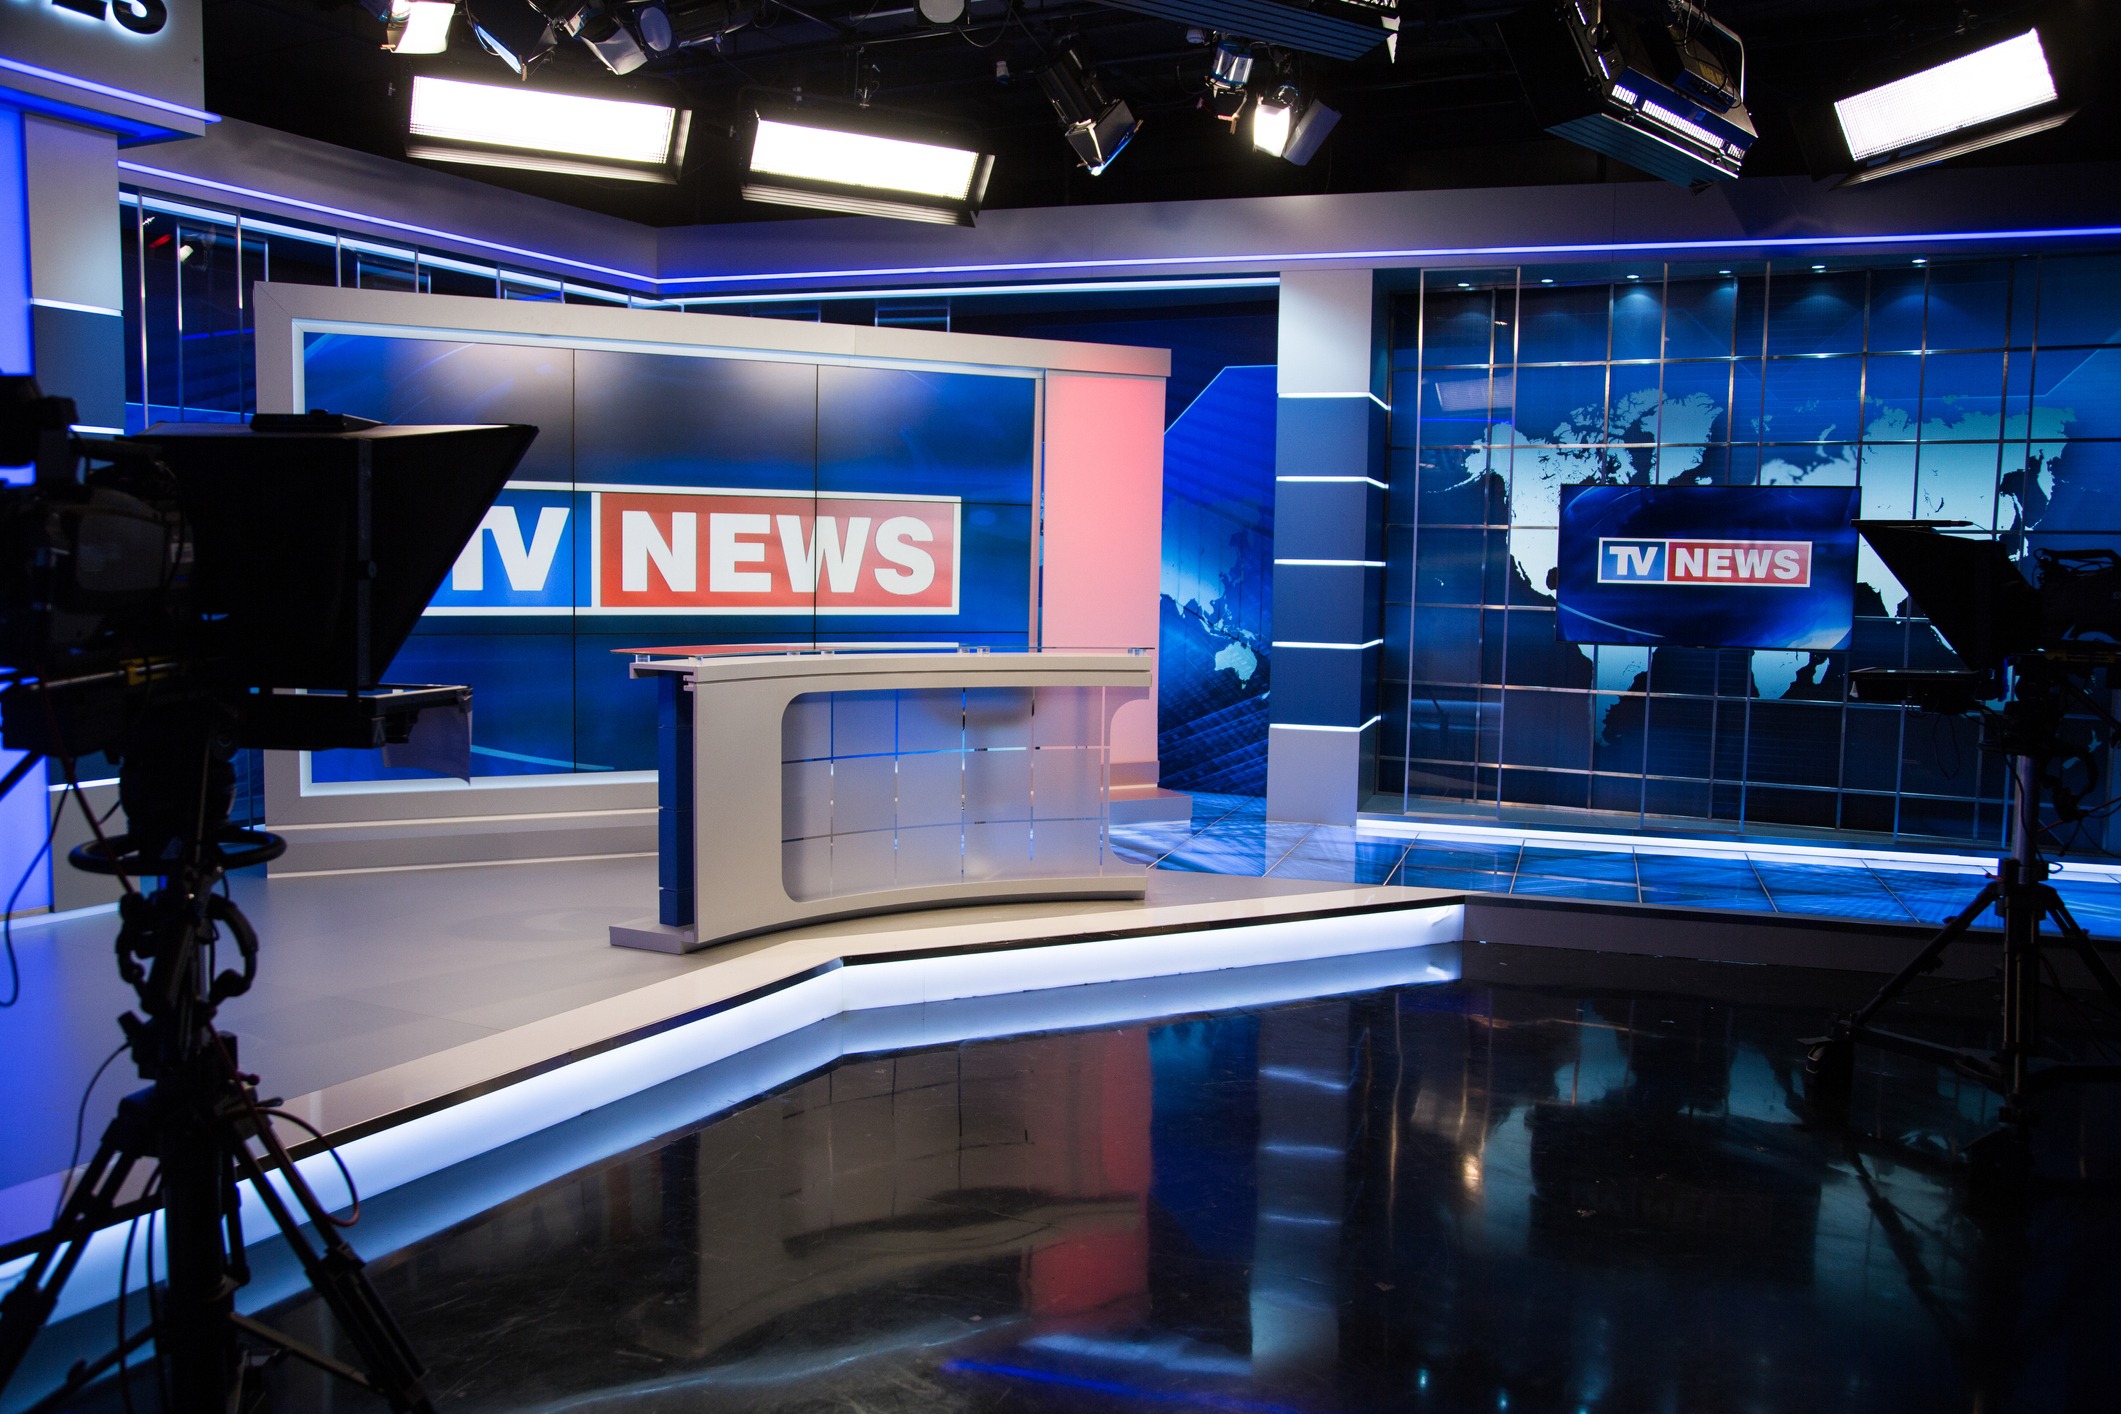 TV News Broadcast Room